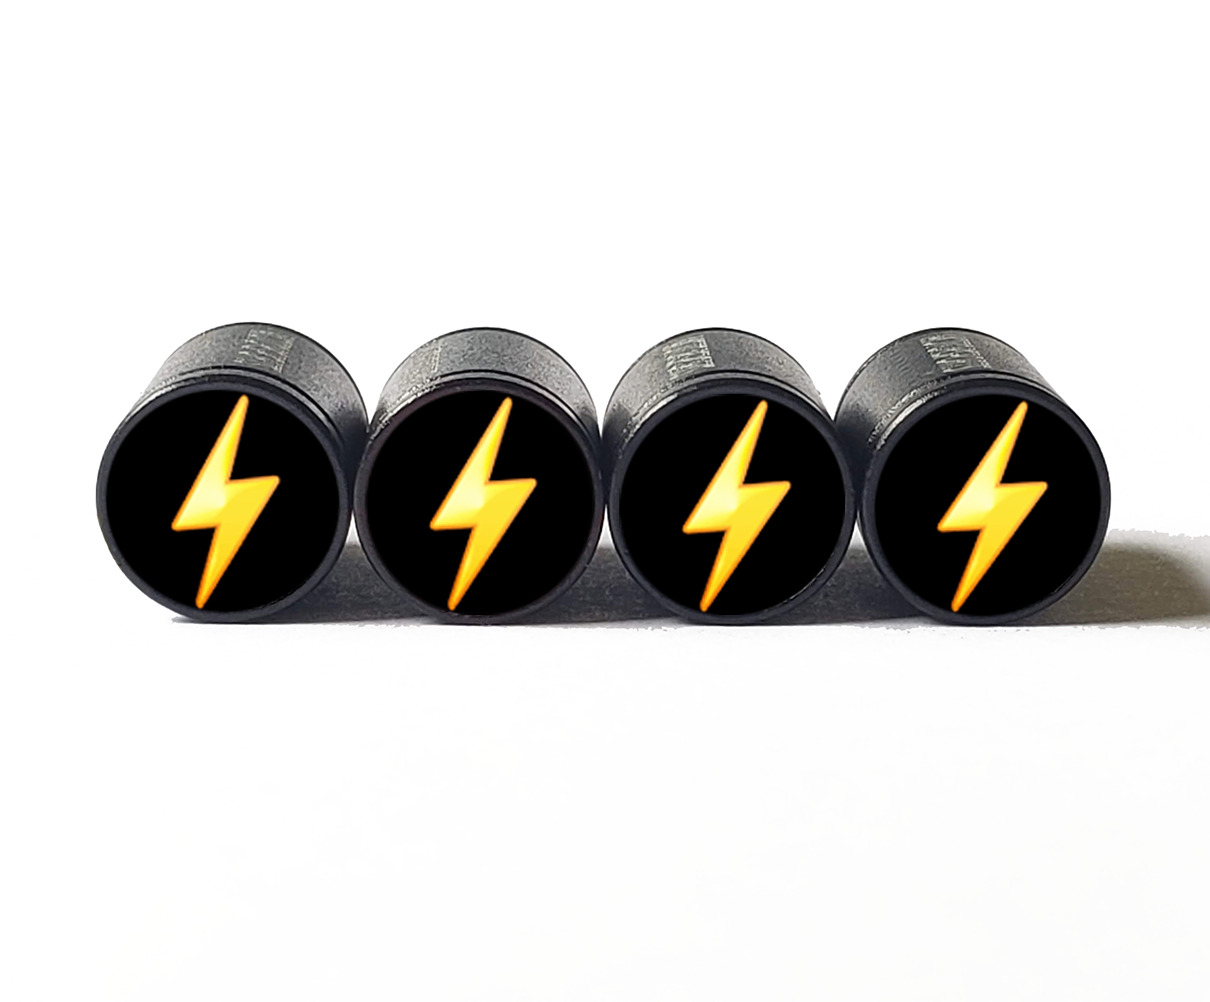 Lightning Bolt Emoji Tire Valve Stem Caps - Set of Four - Fits on all Vehicles